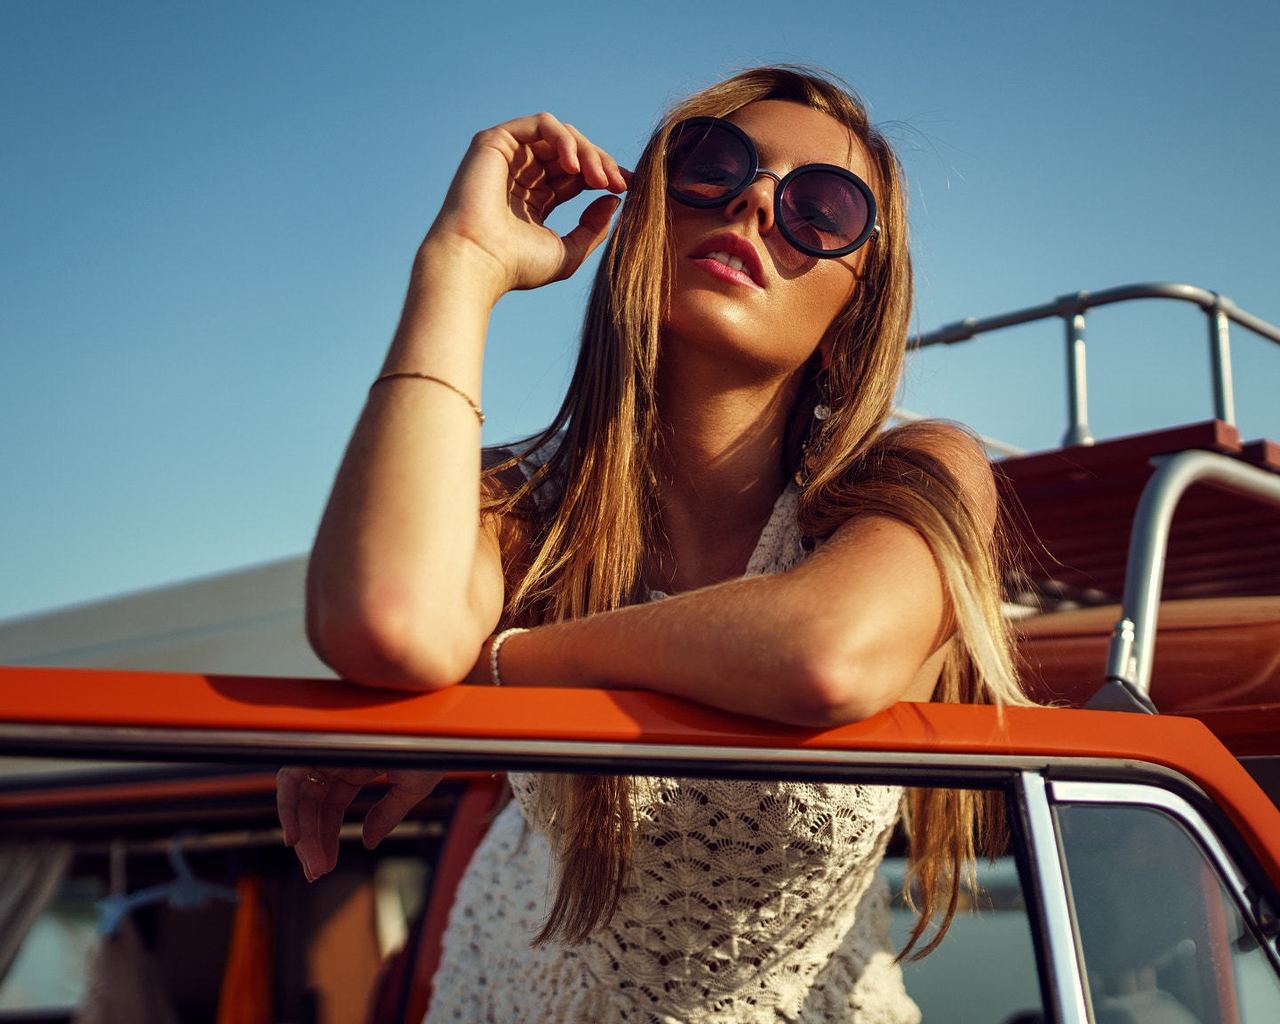 Image: Girl, blonde, dark glasses, car, sun